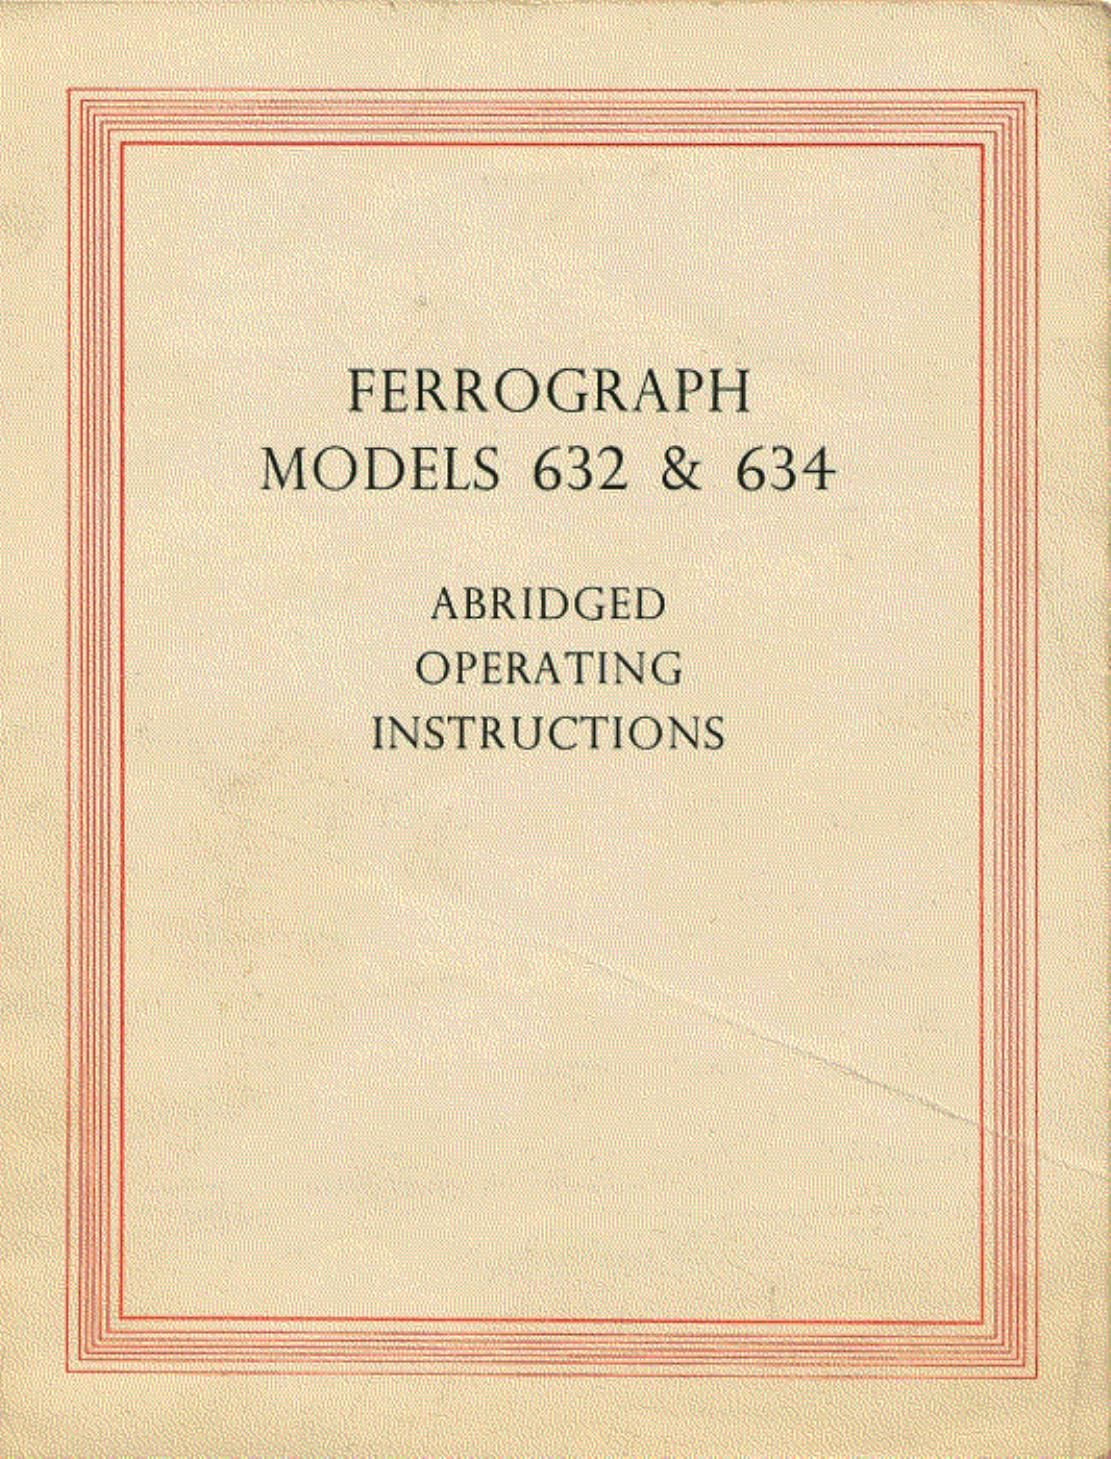 Ferrograph 632 Owners Manual